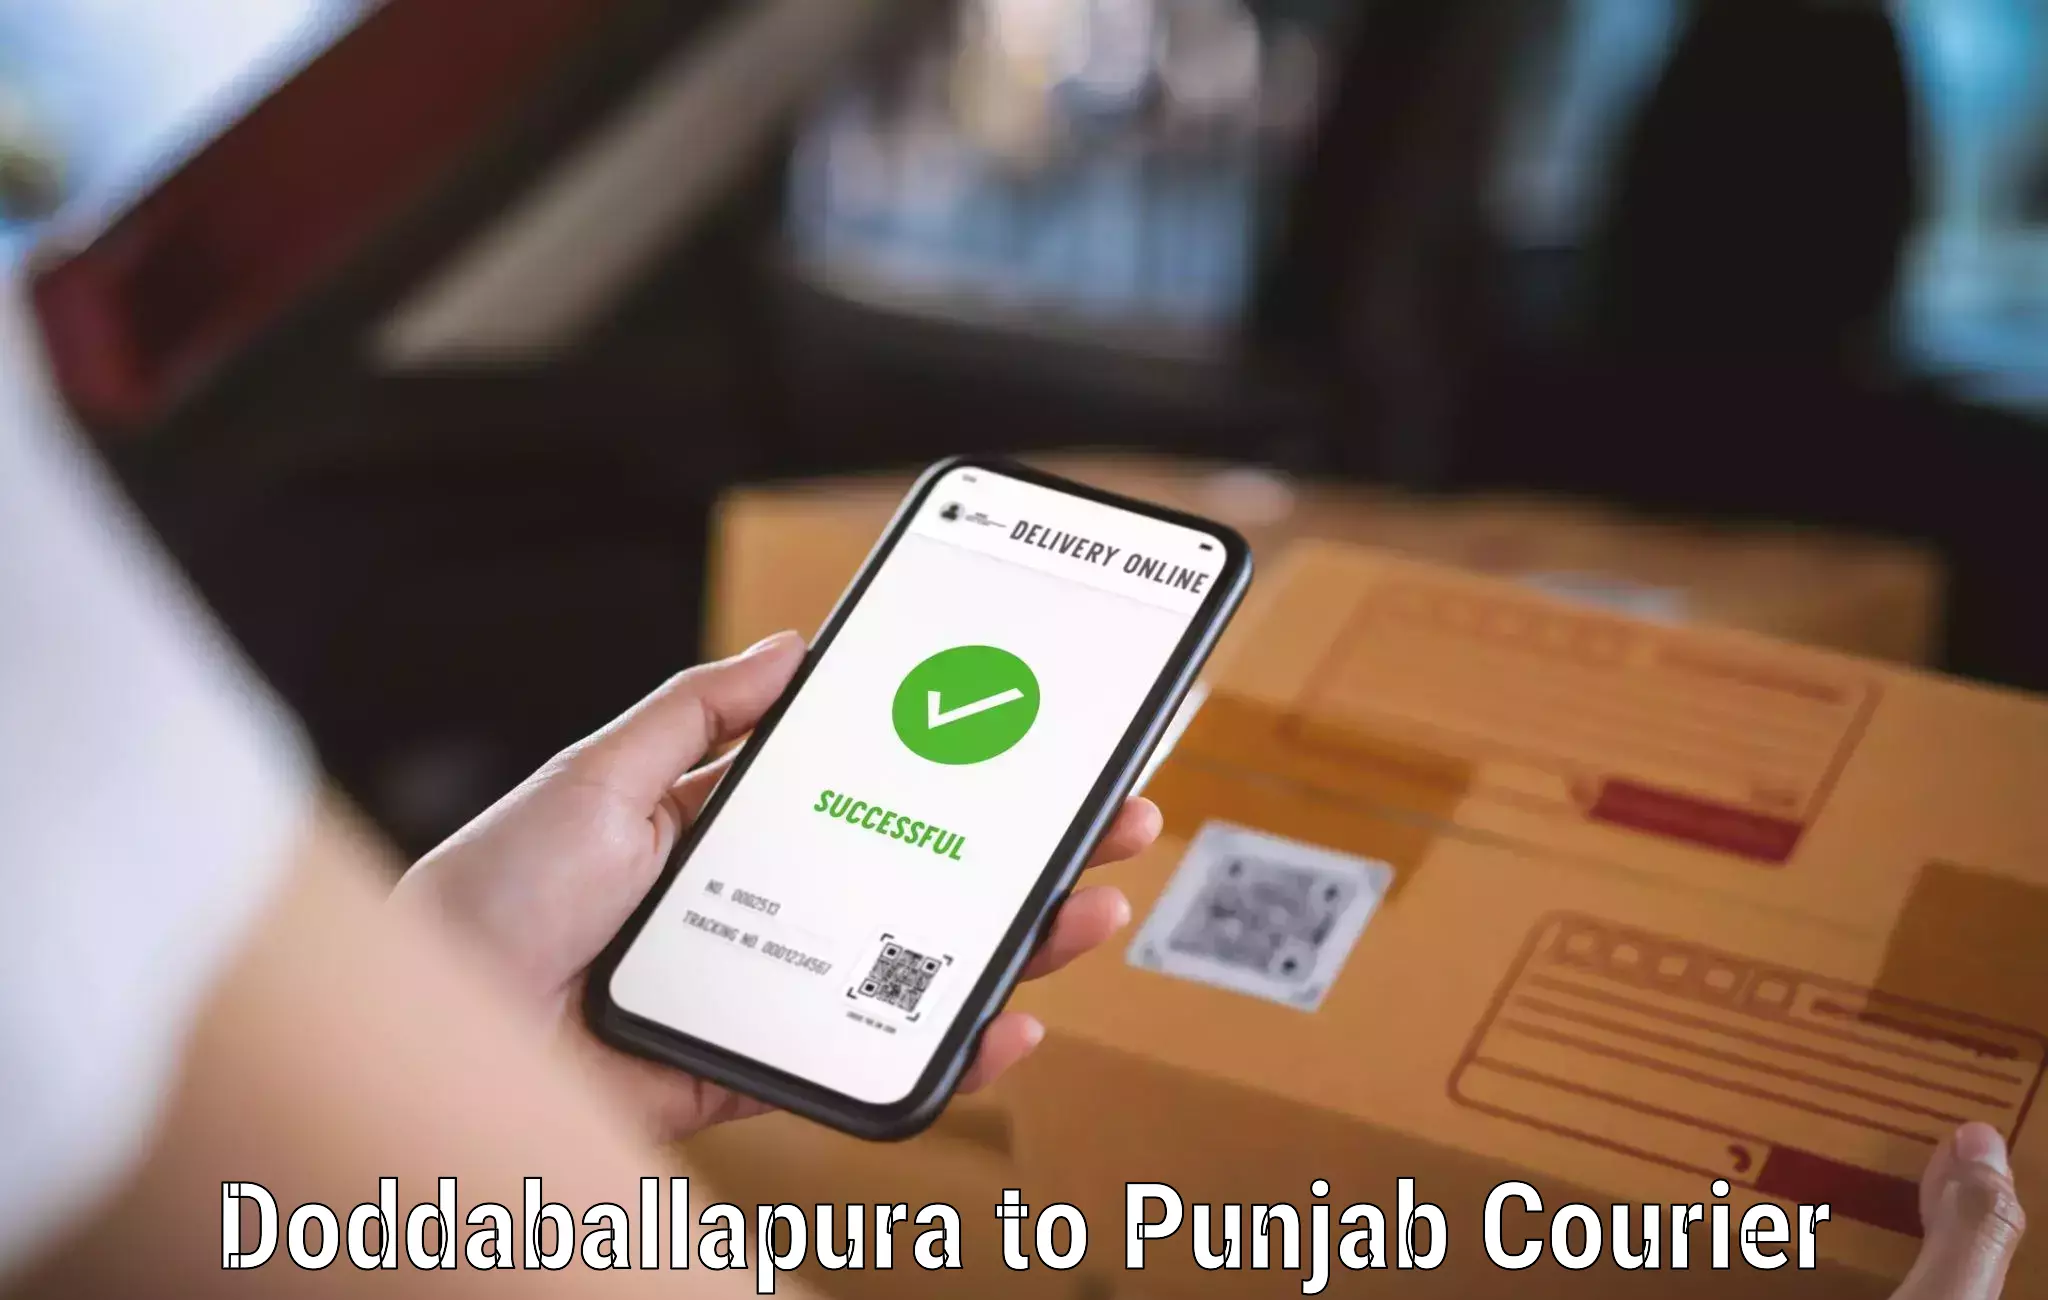 On-demand delivery in Doddaballapura to Mohali